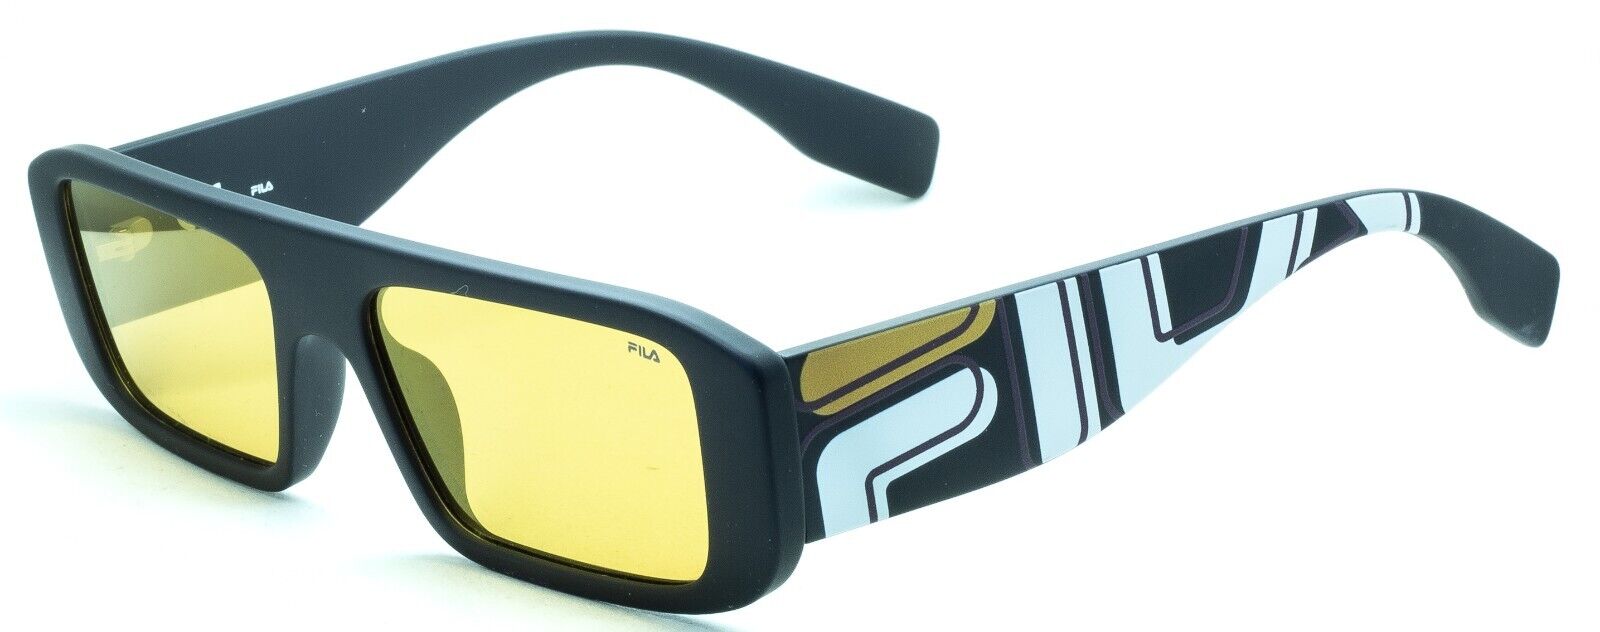 B Motif Square Frame Sunglasses in Black